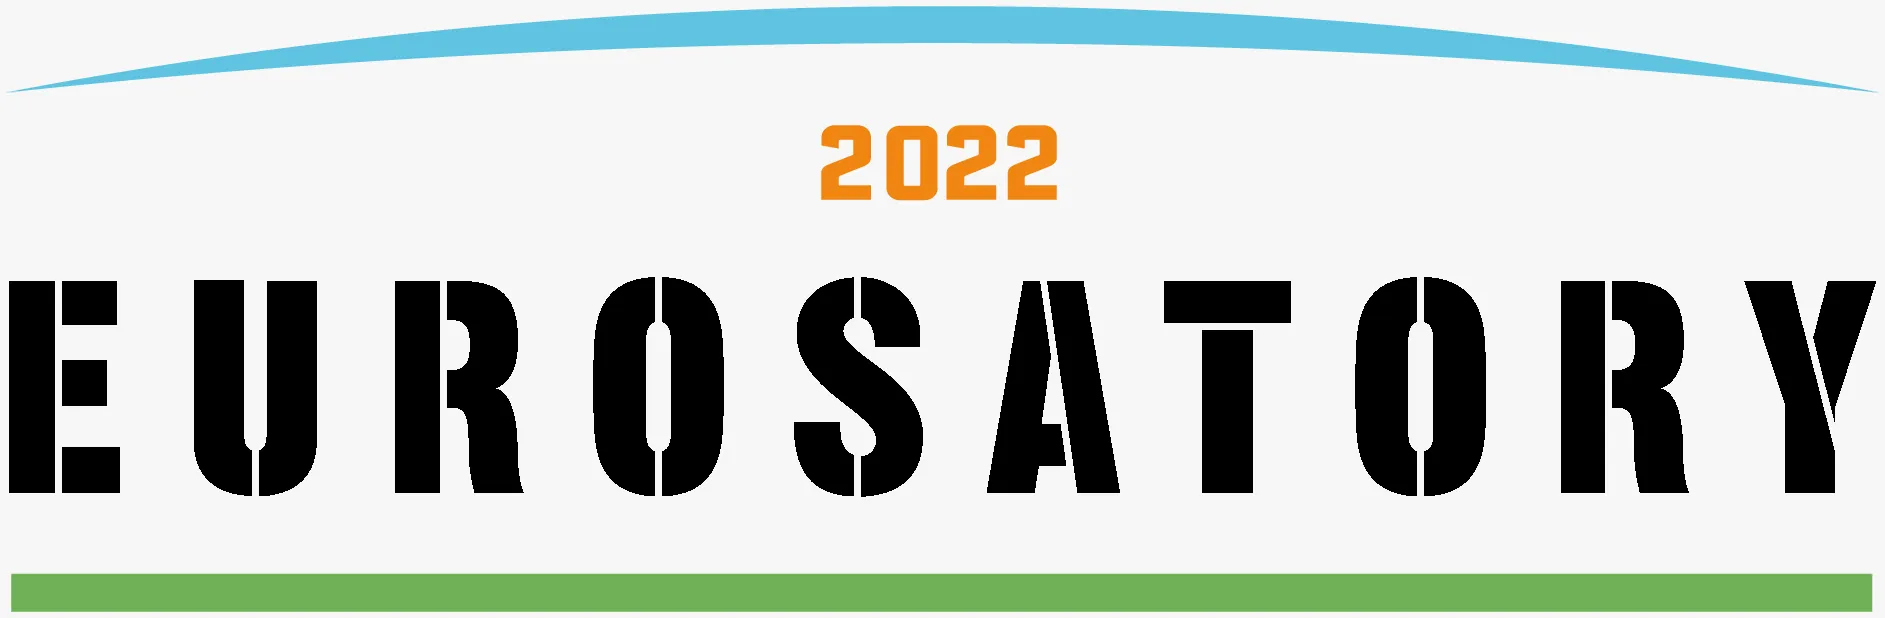 Eurosatory 2022 logo